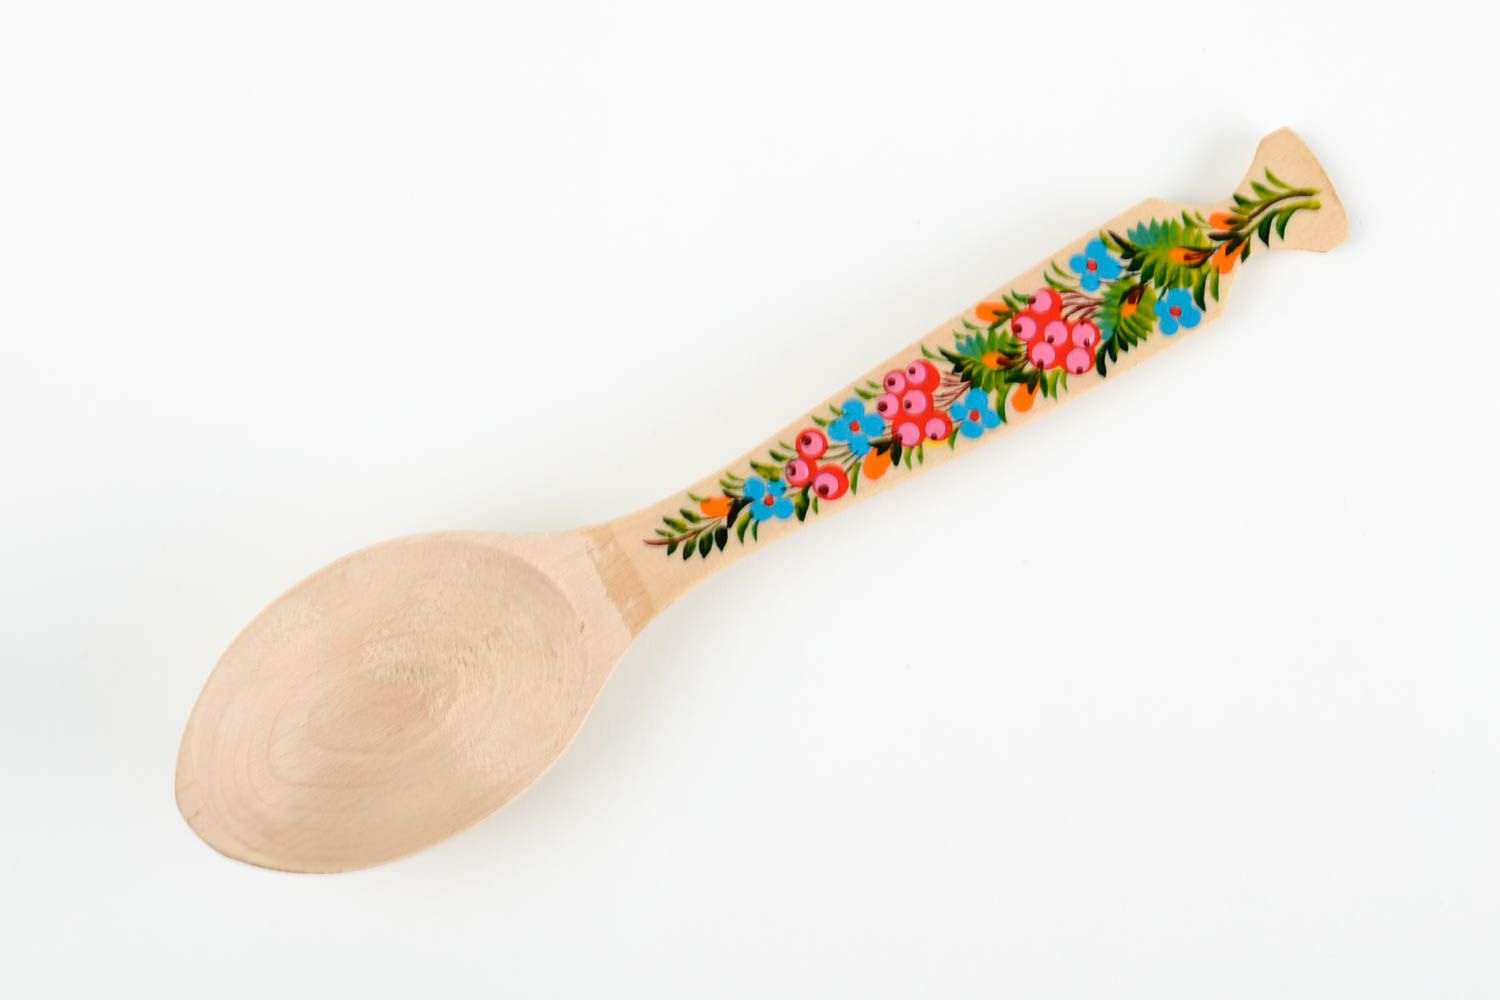 Handmade spoon designer spoon wooden cutlery gift ideas decor ideas unusul spoon photo 4